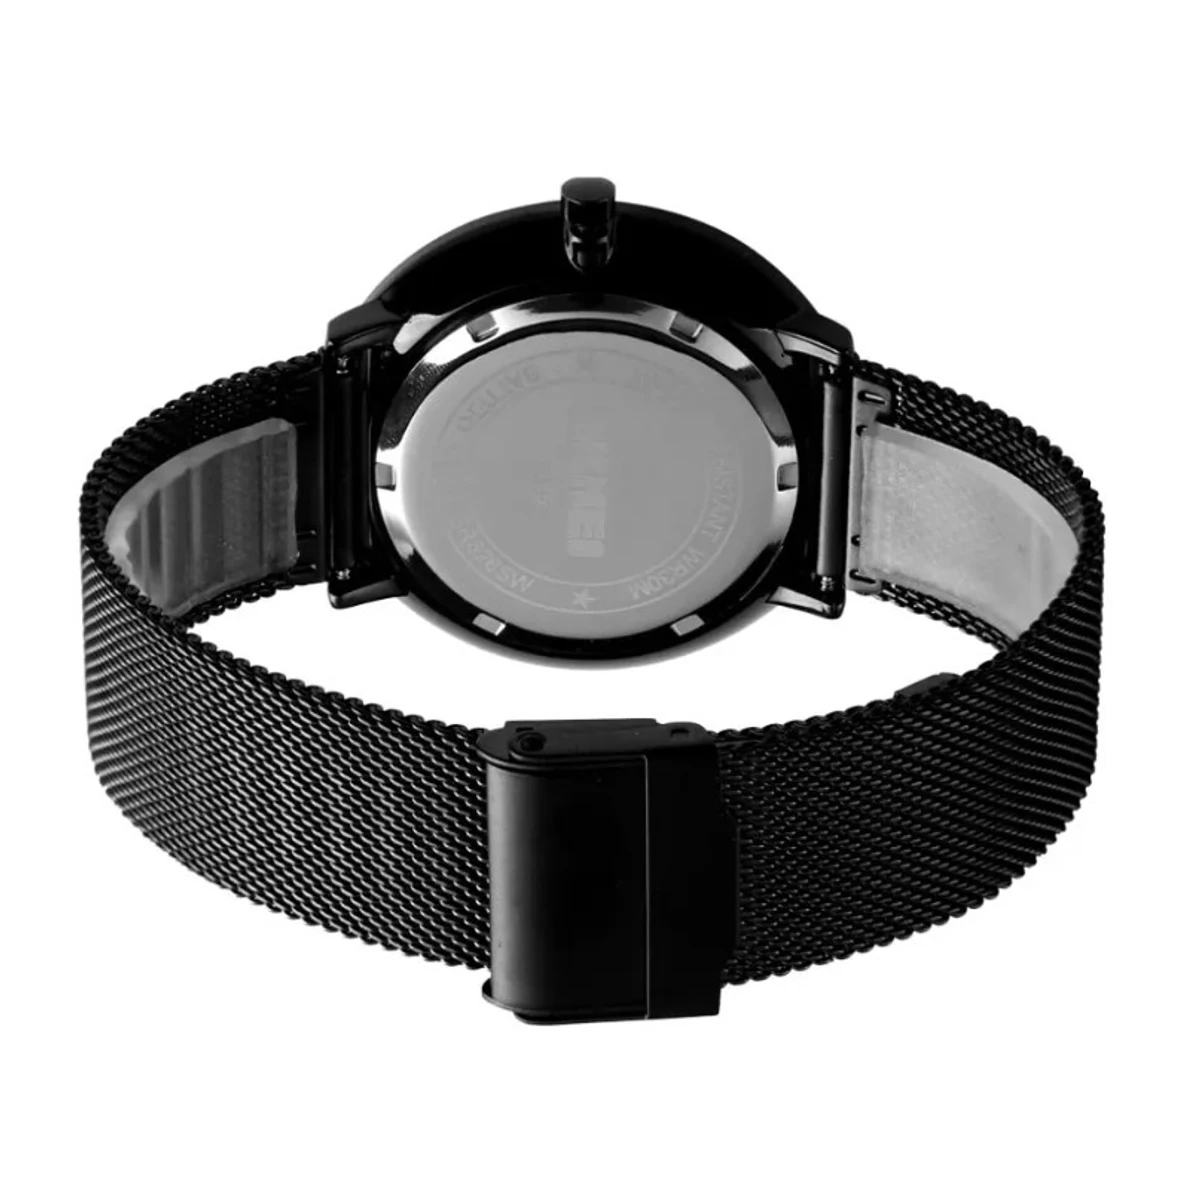 SKMEI 9185 Fashion 30M Waterproof Quartz Watch